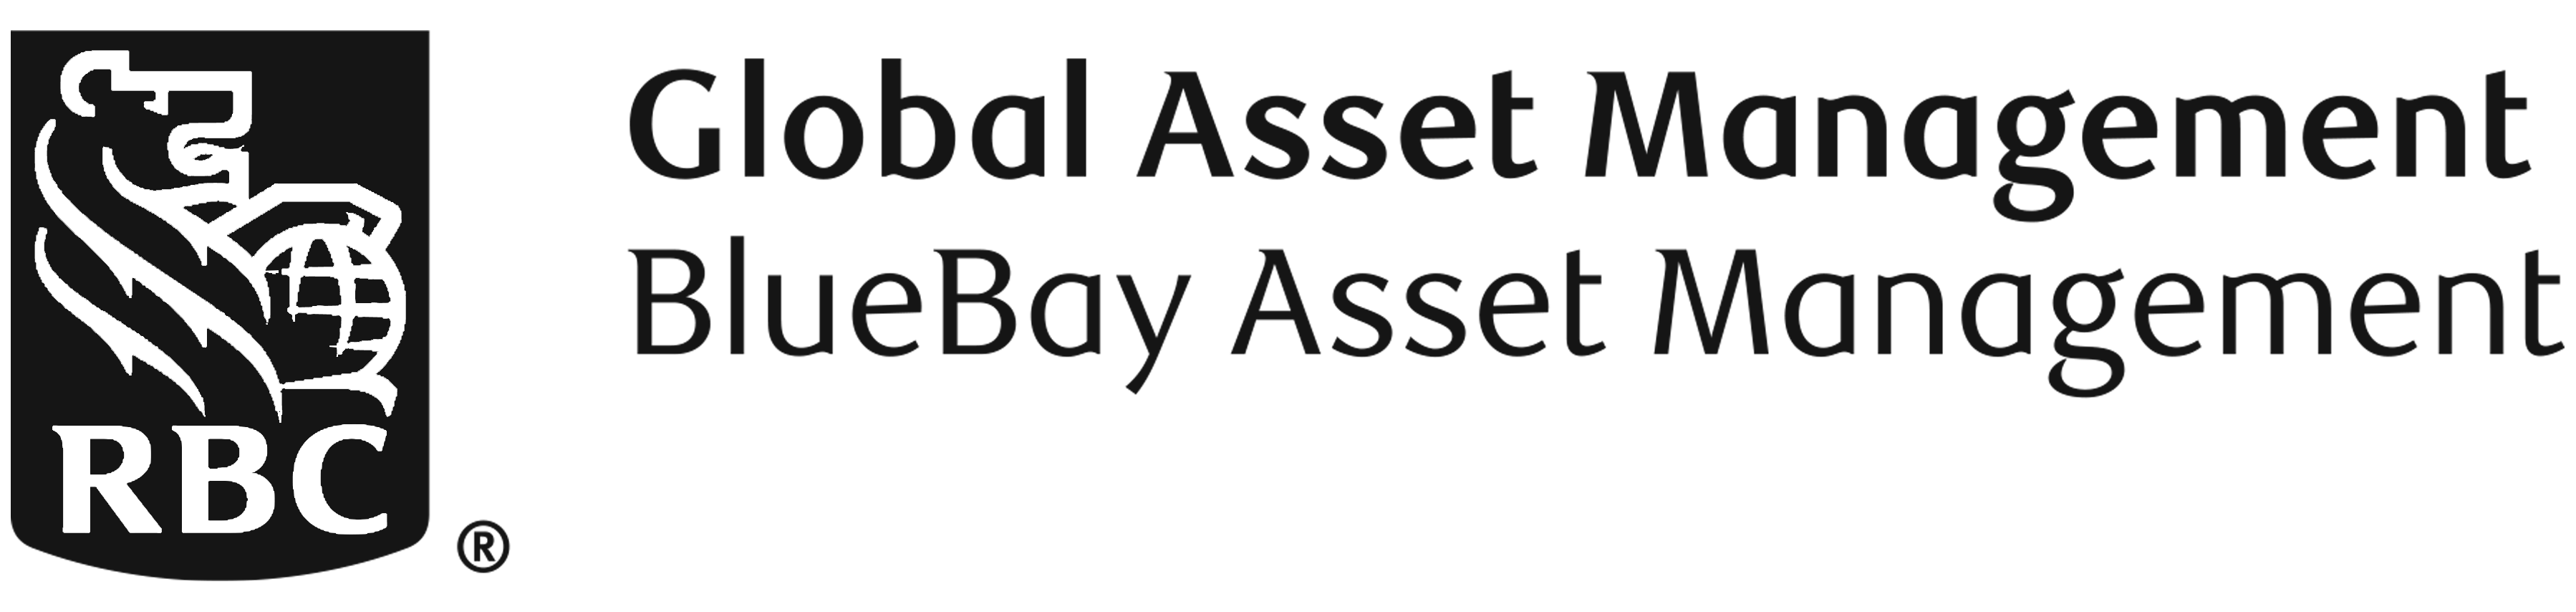 Blue Bay Asset Management